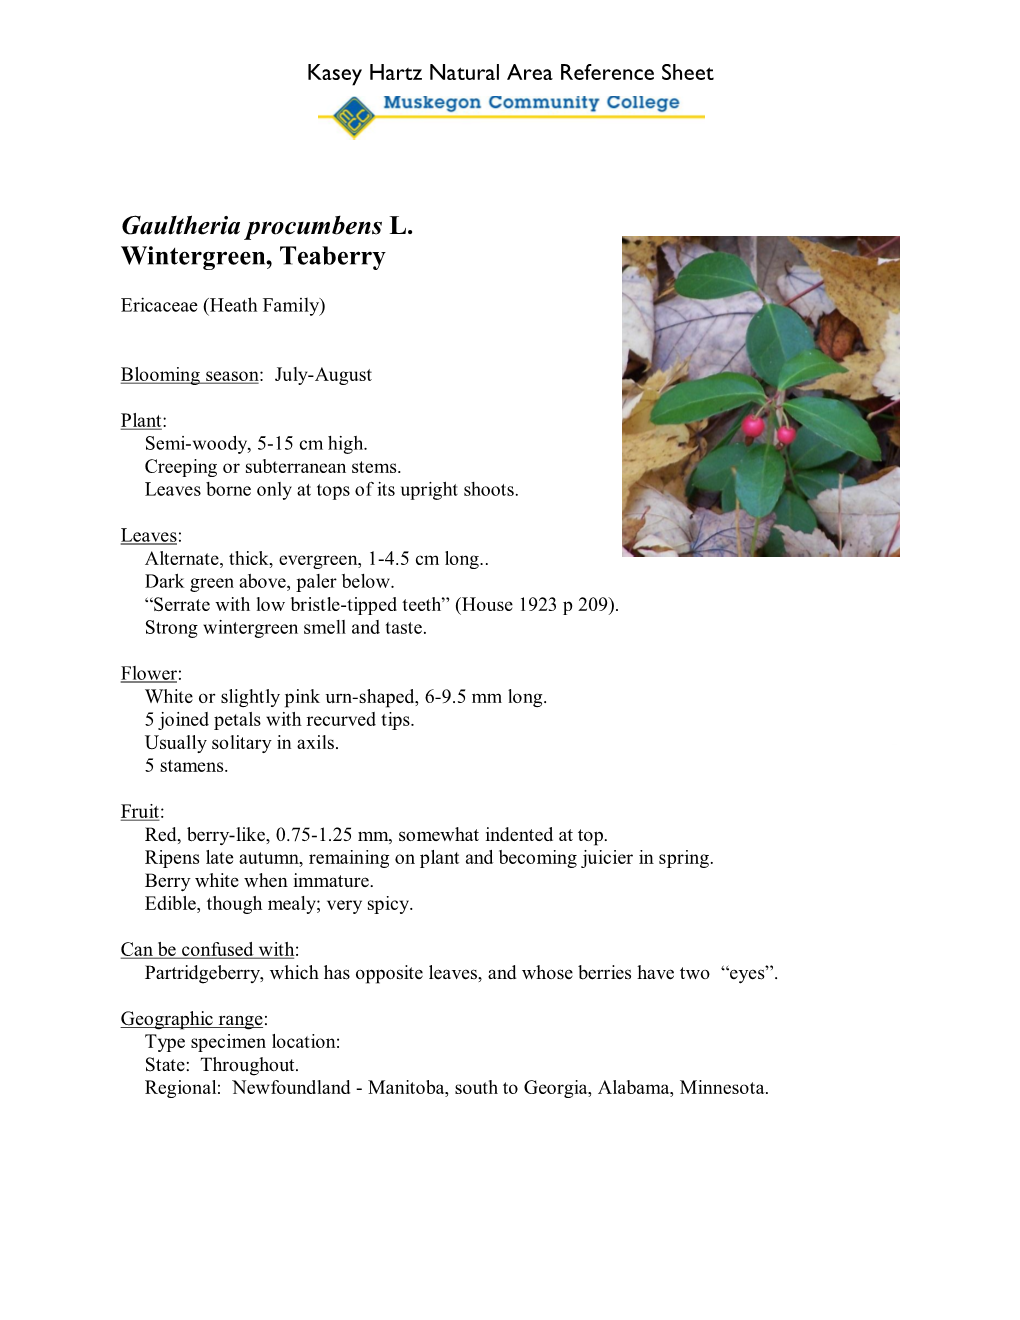 Gaultheria Procumbens L. Wintergreen, Teaberry